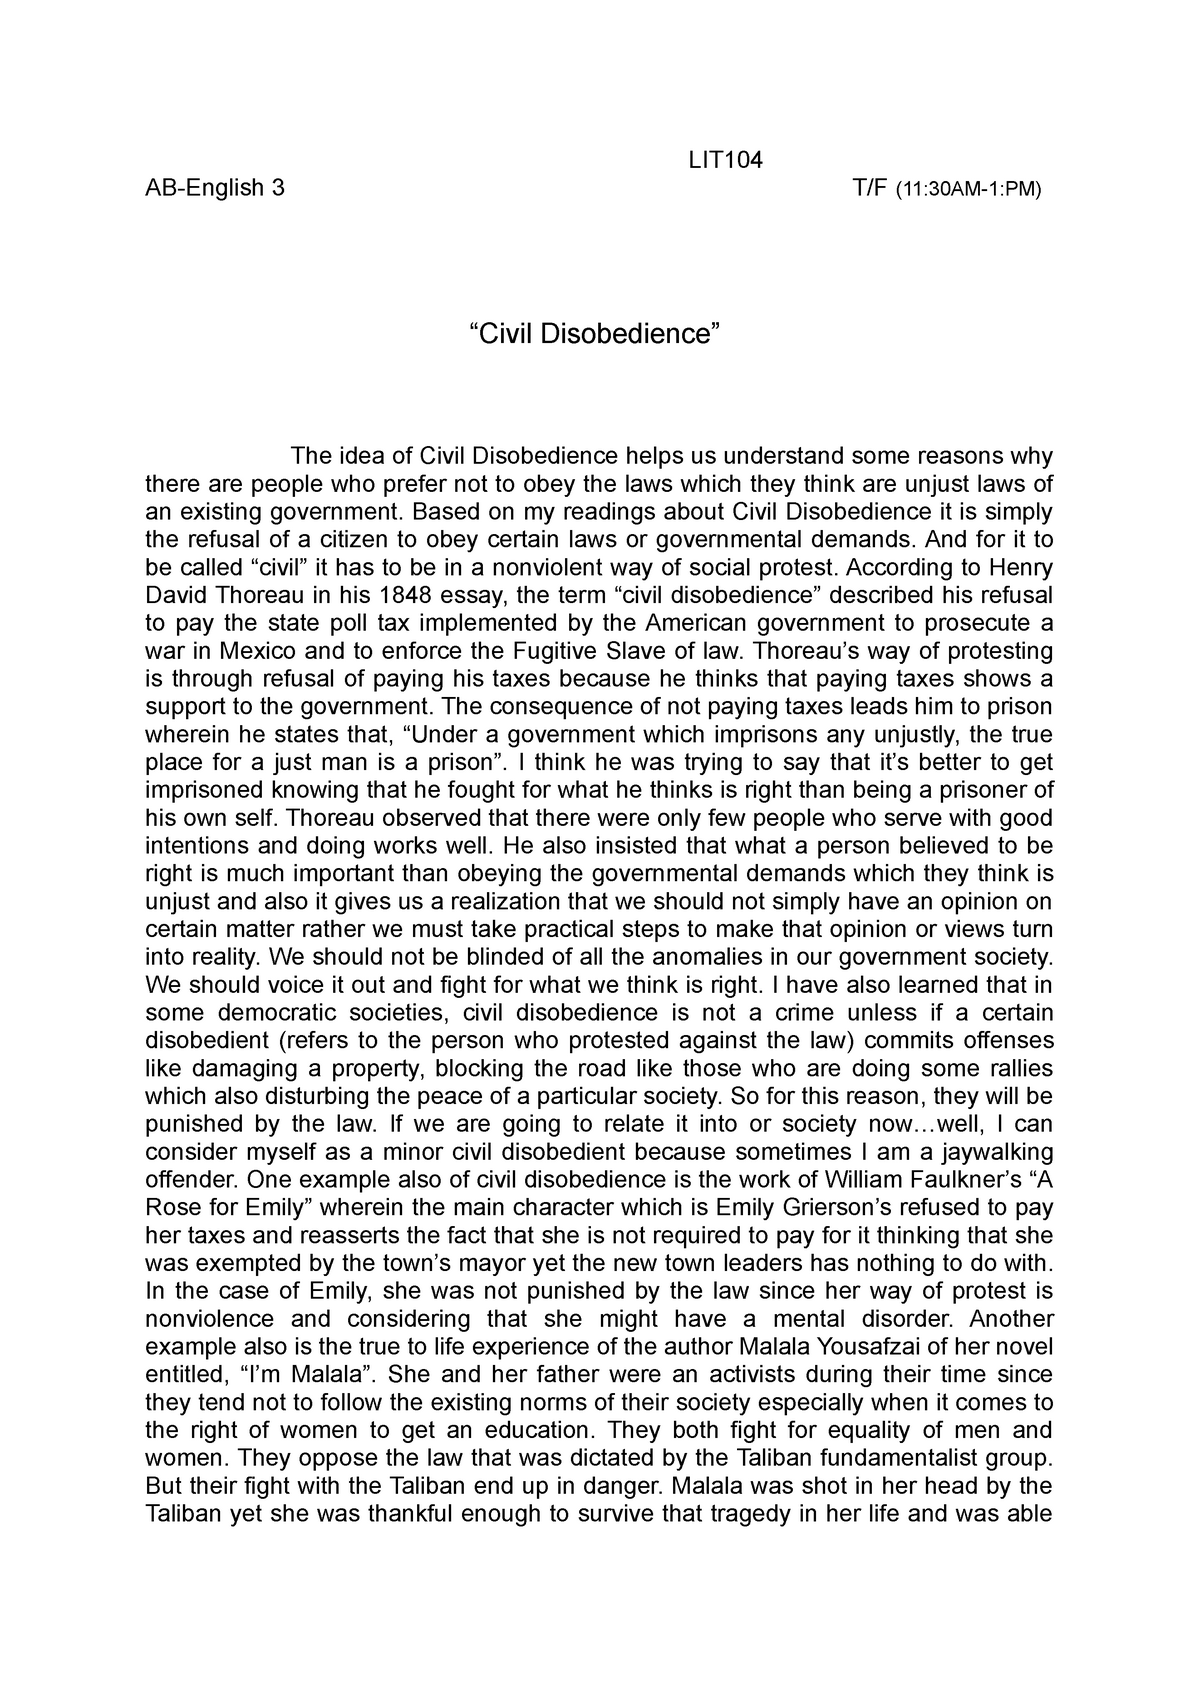 civil disobedience essay summary